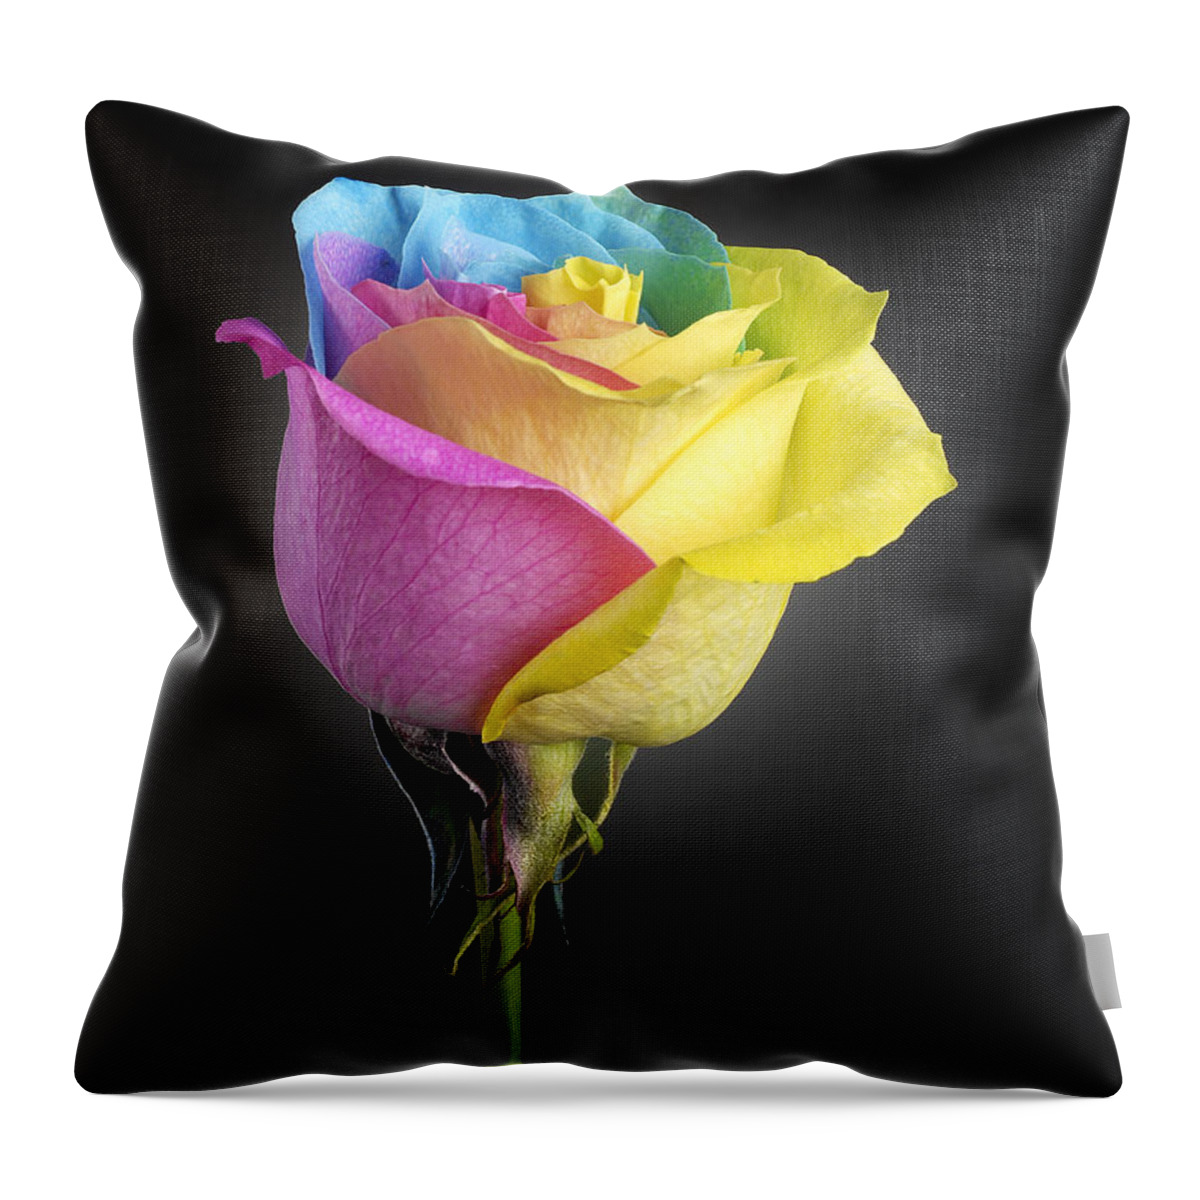 Rainbow Rose Throw Pillow featuring the photograph Rainbow Rose 1 by Tony Cordoza